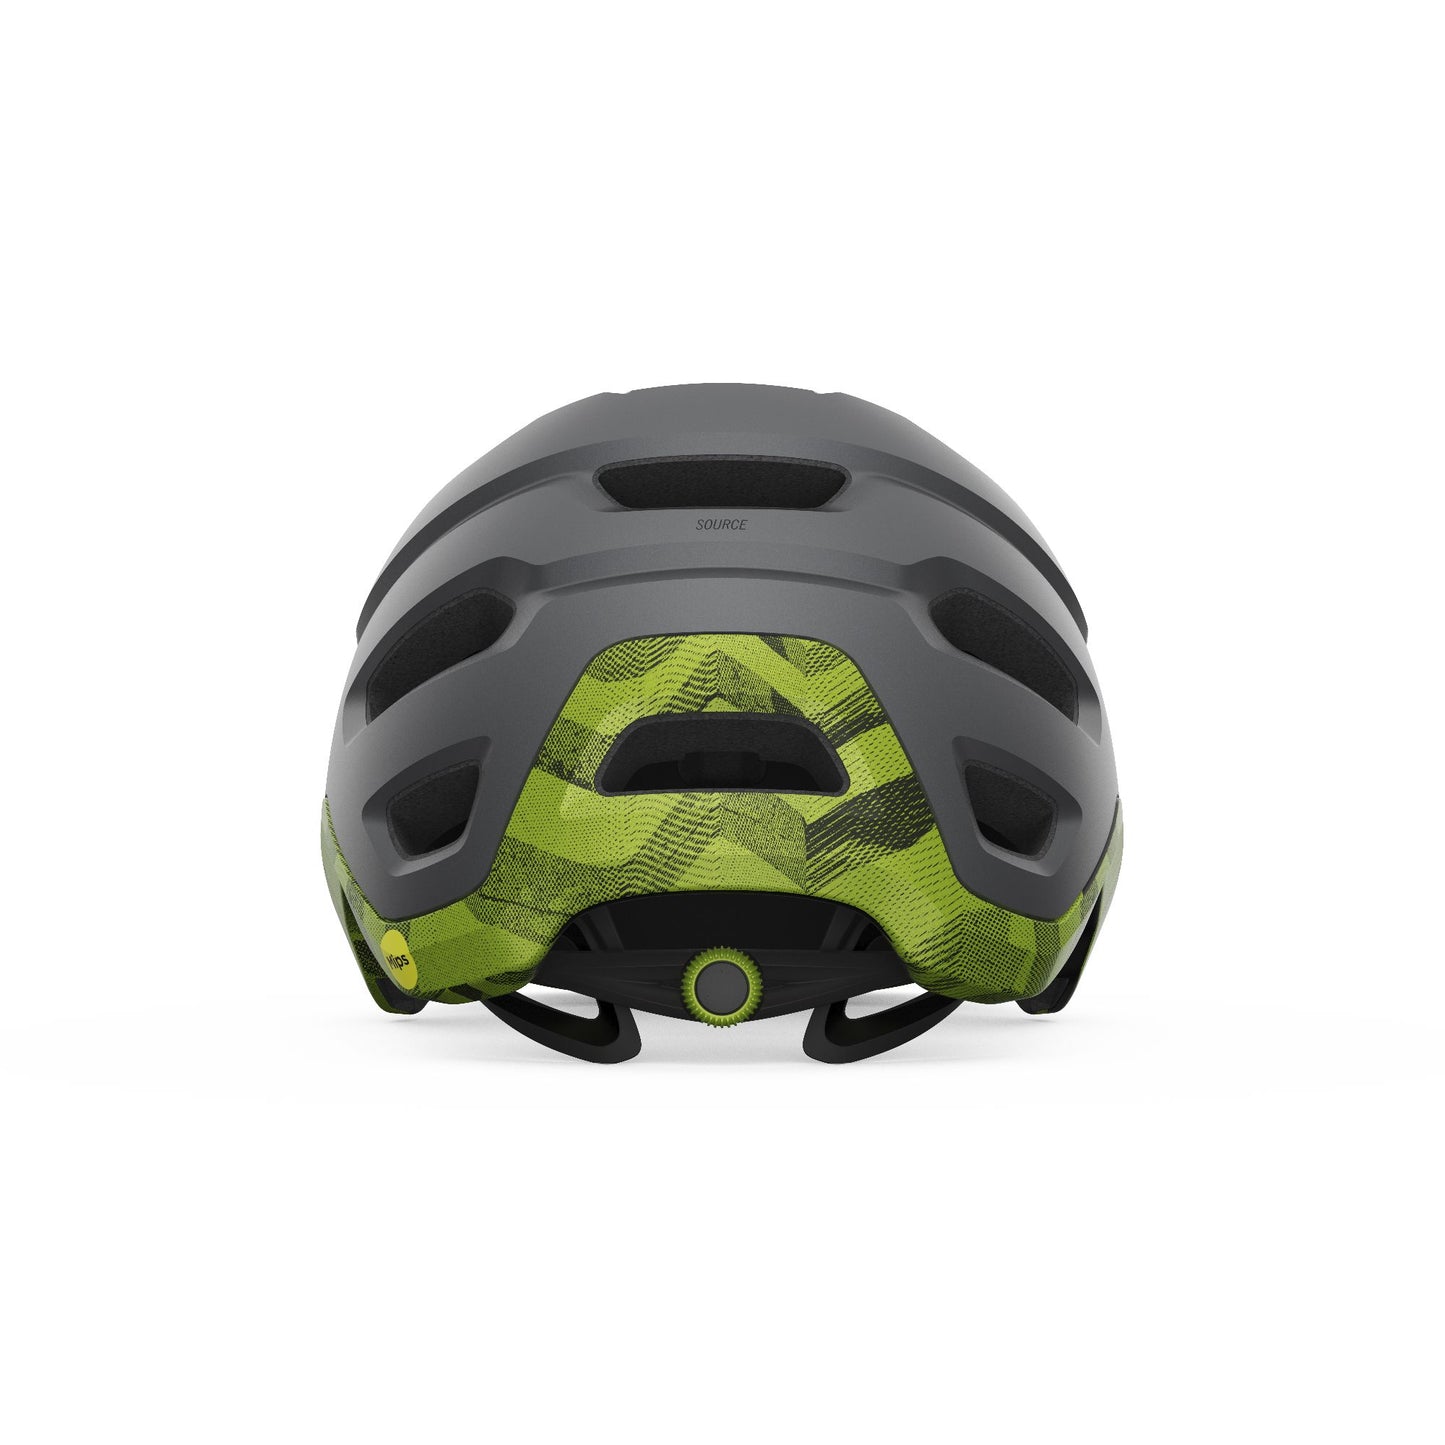 Giro Source MIPS Helmet Matte Metallic Black Ano Lime Bike Helmets